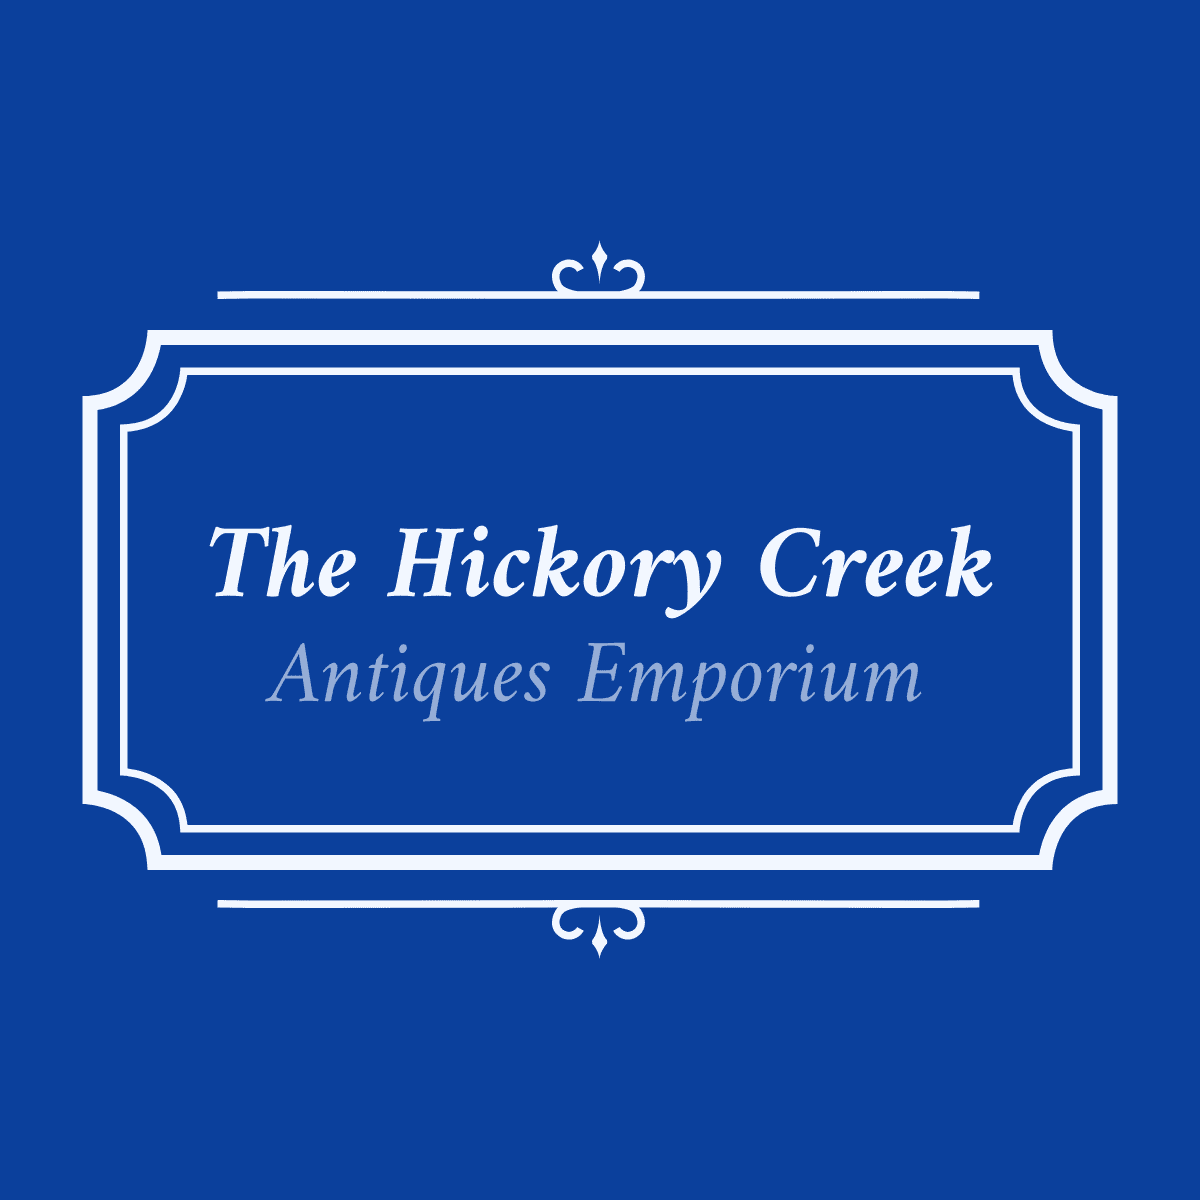 Hickory Creek